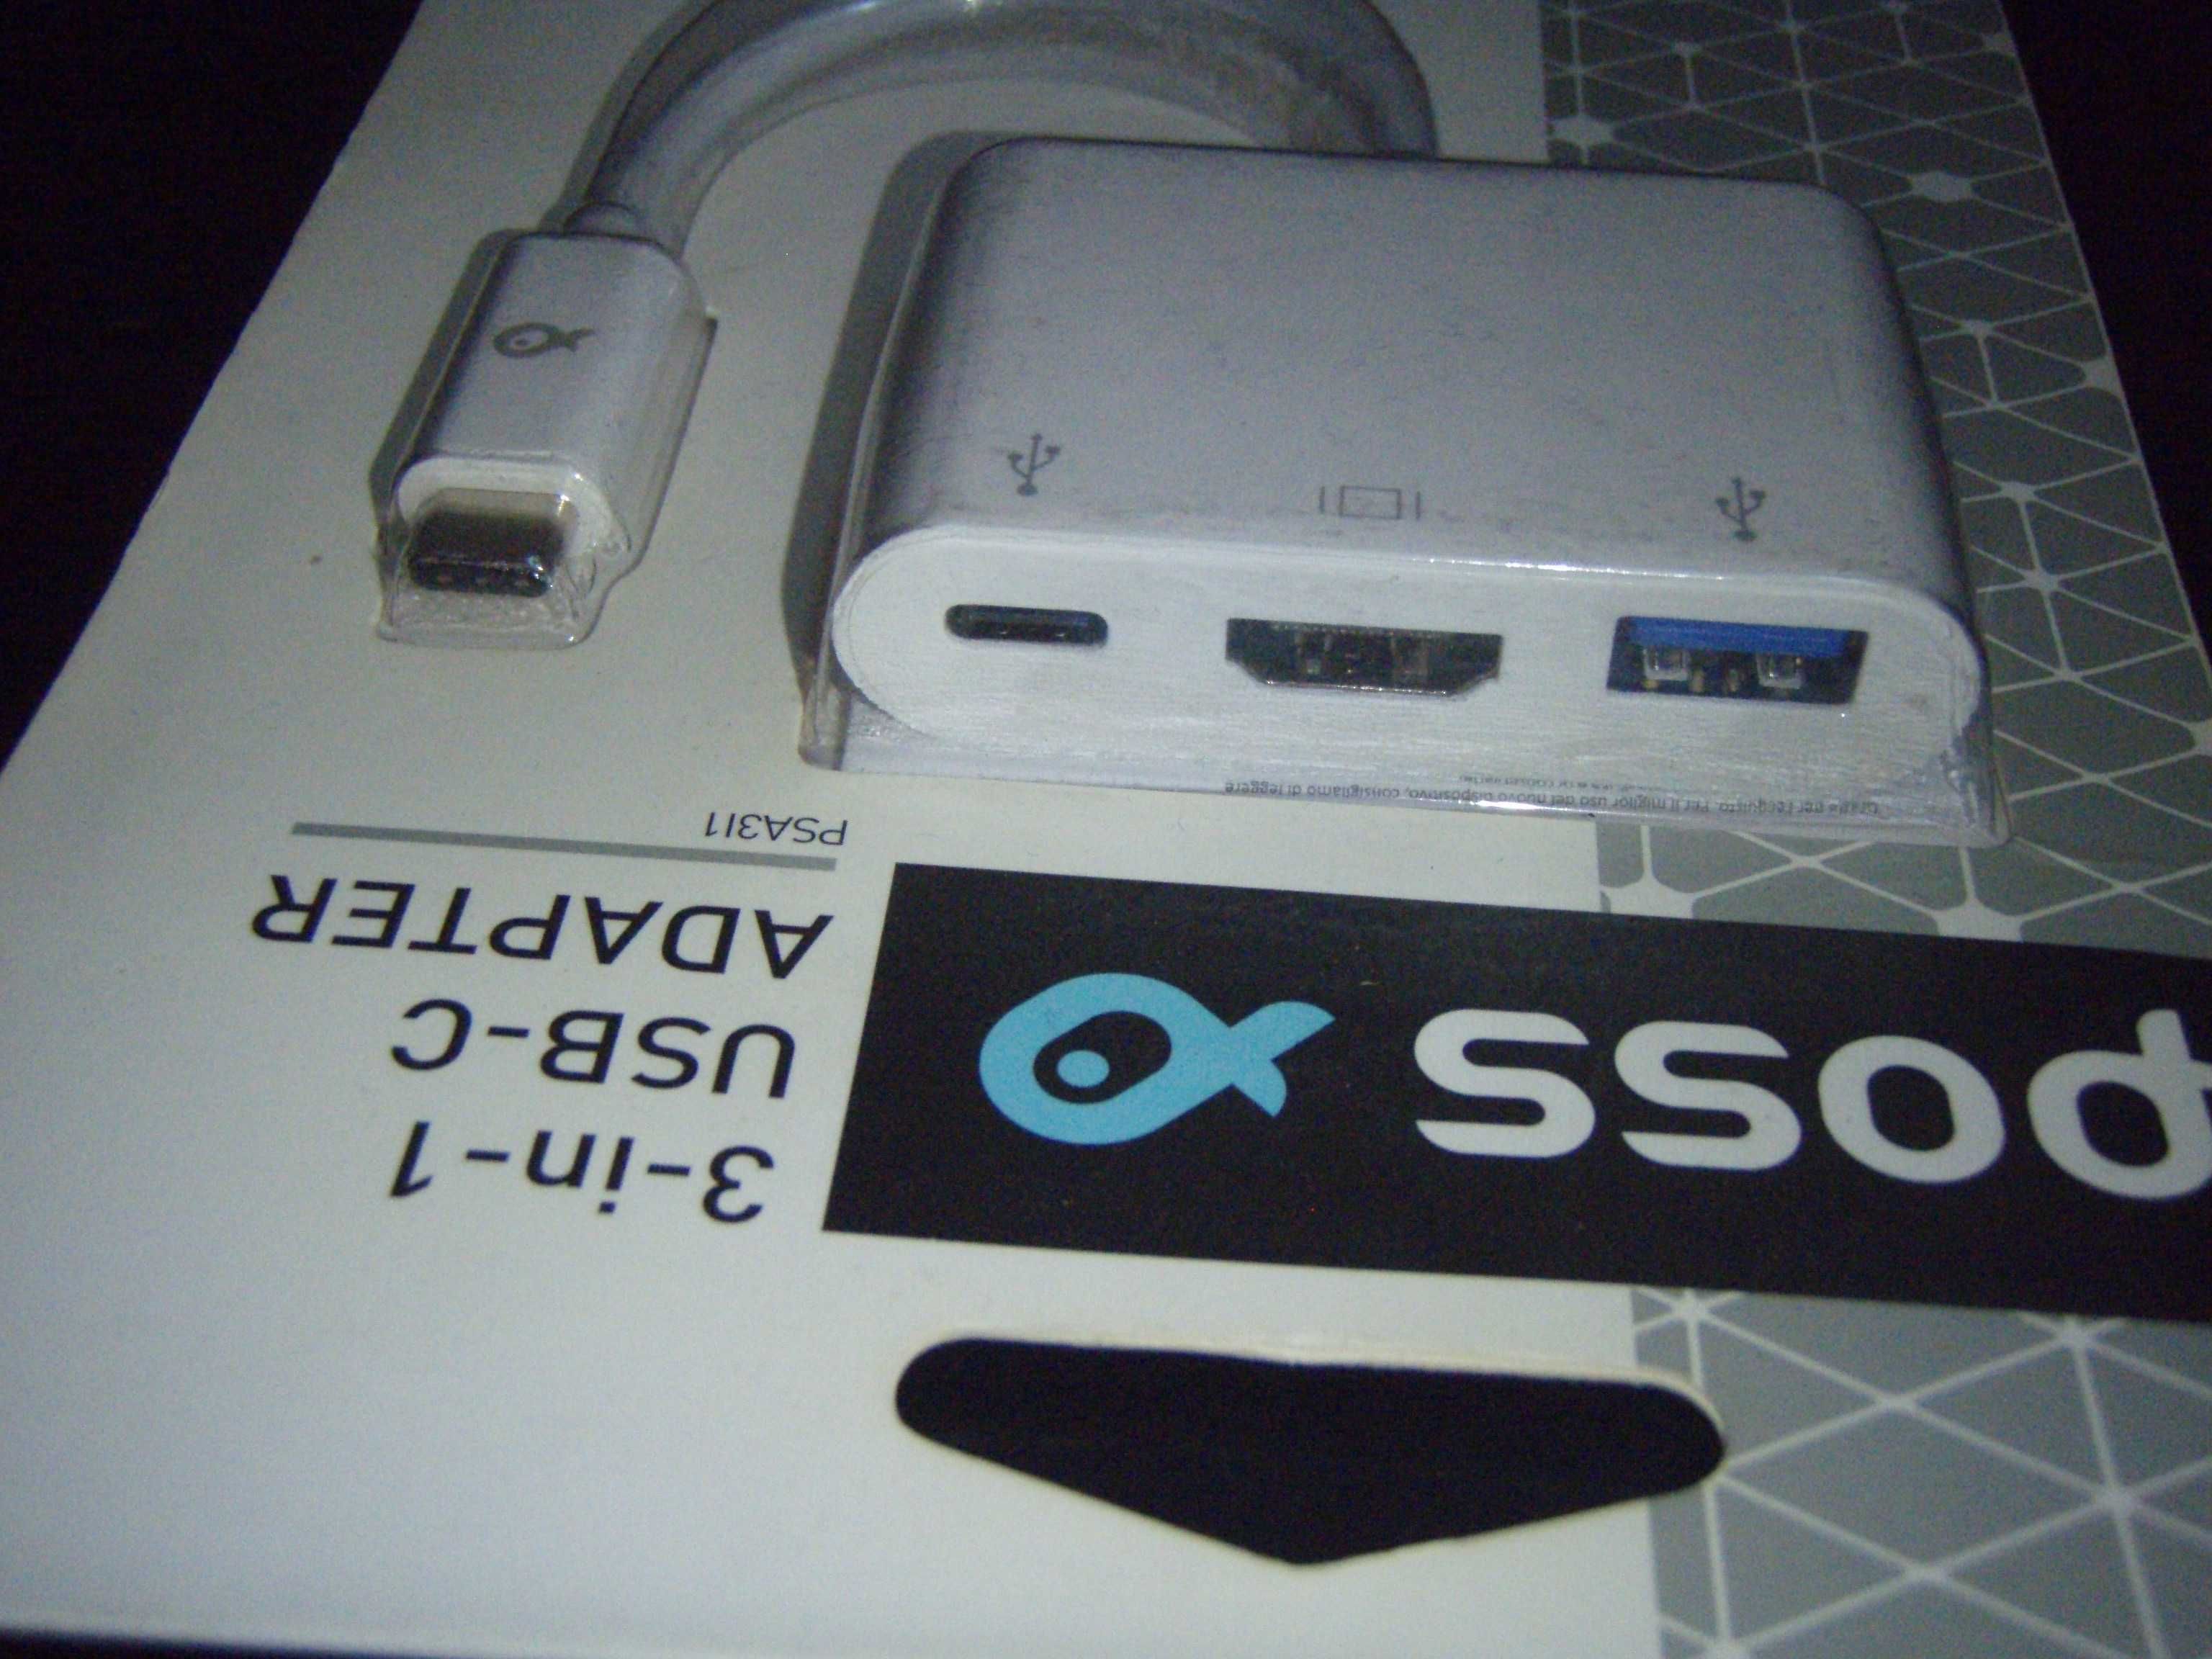 Adaptor USB-C POSS 3-in-1 USB-C la HDMI USB-A USB-C, nou (sigilat)